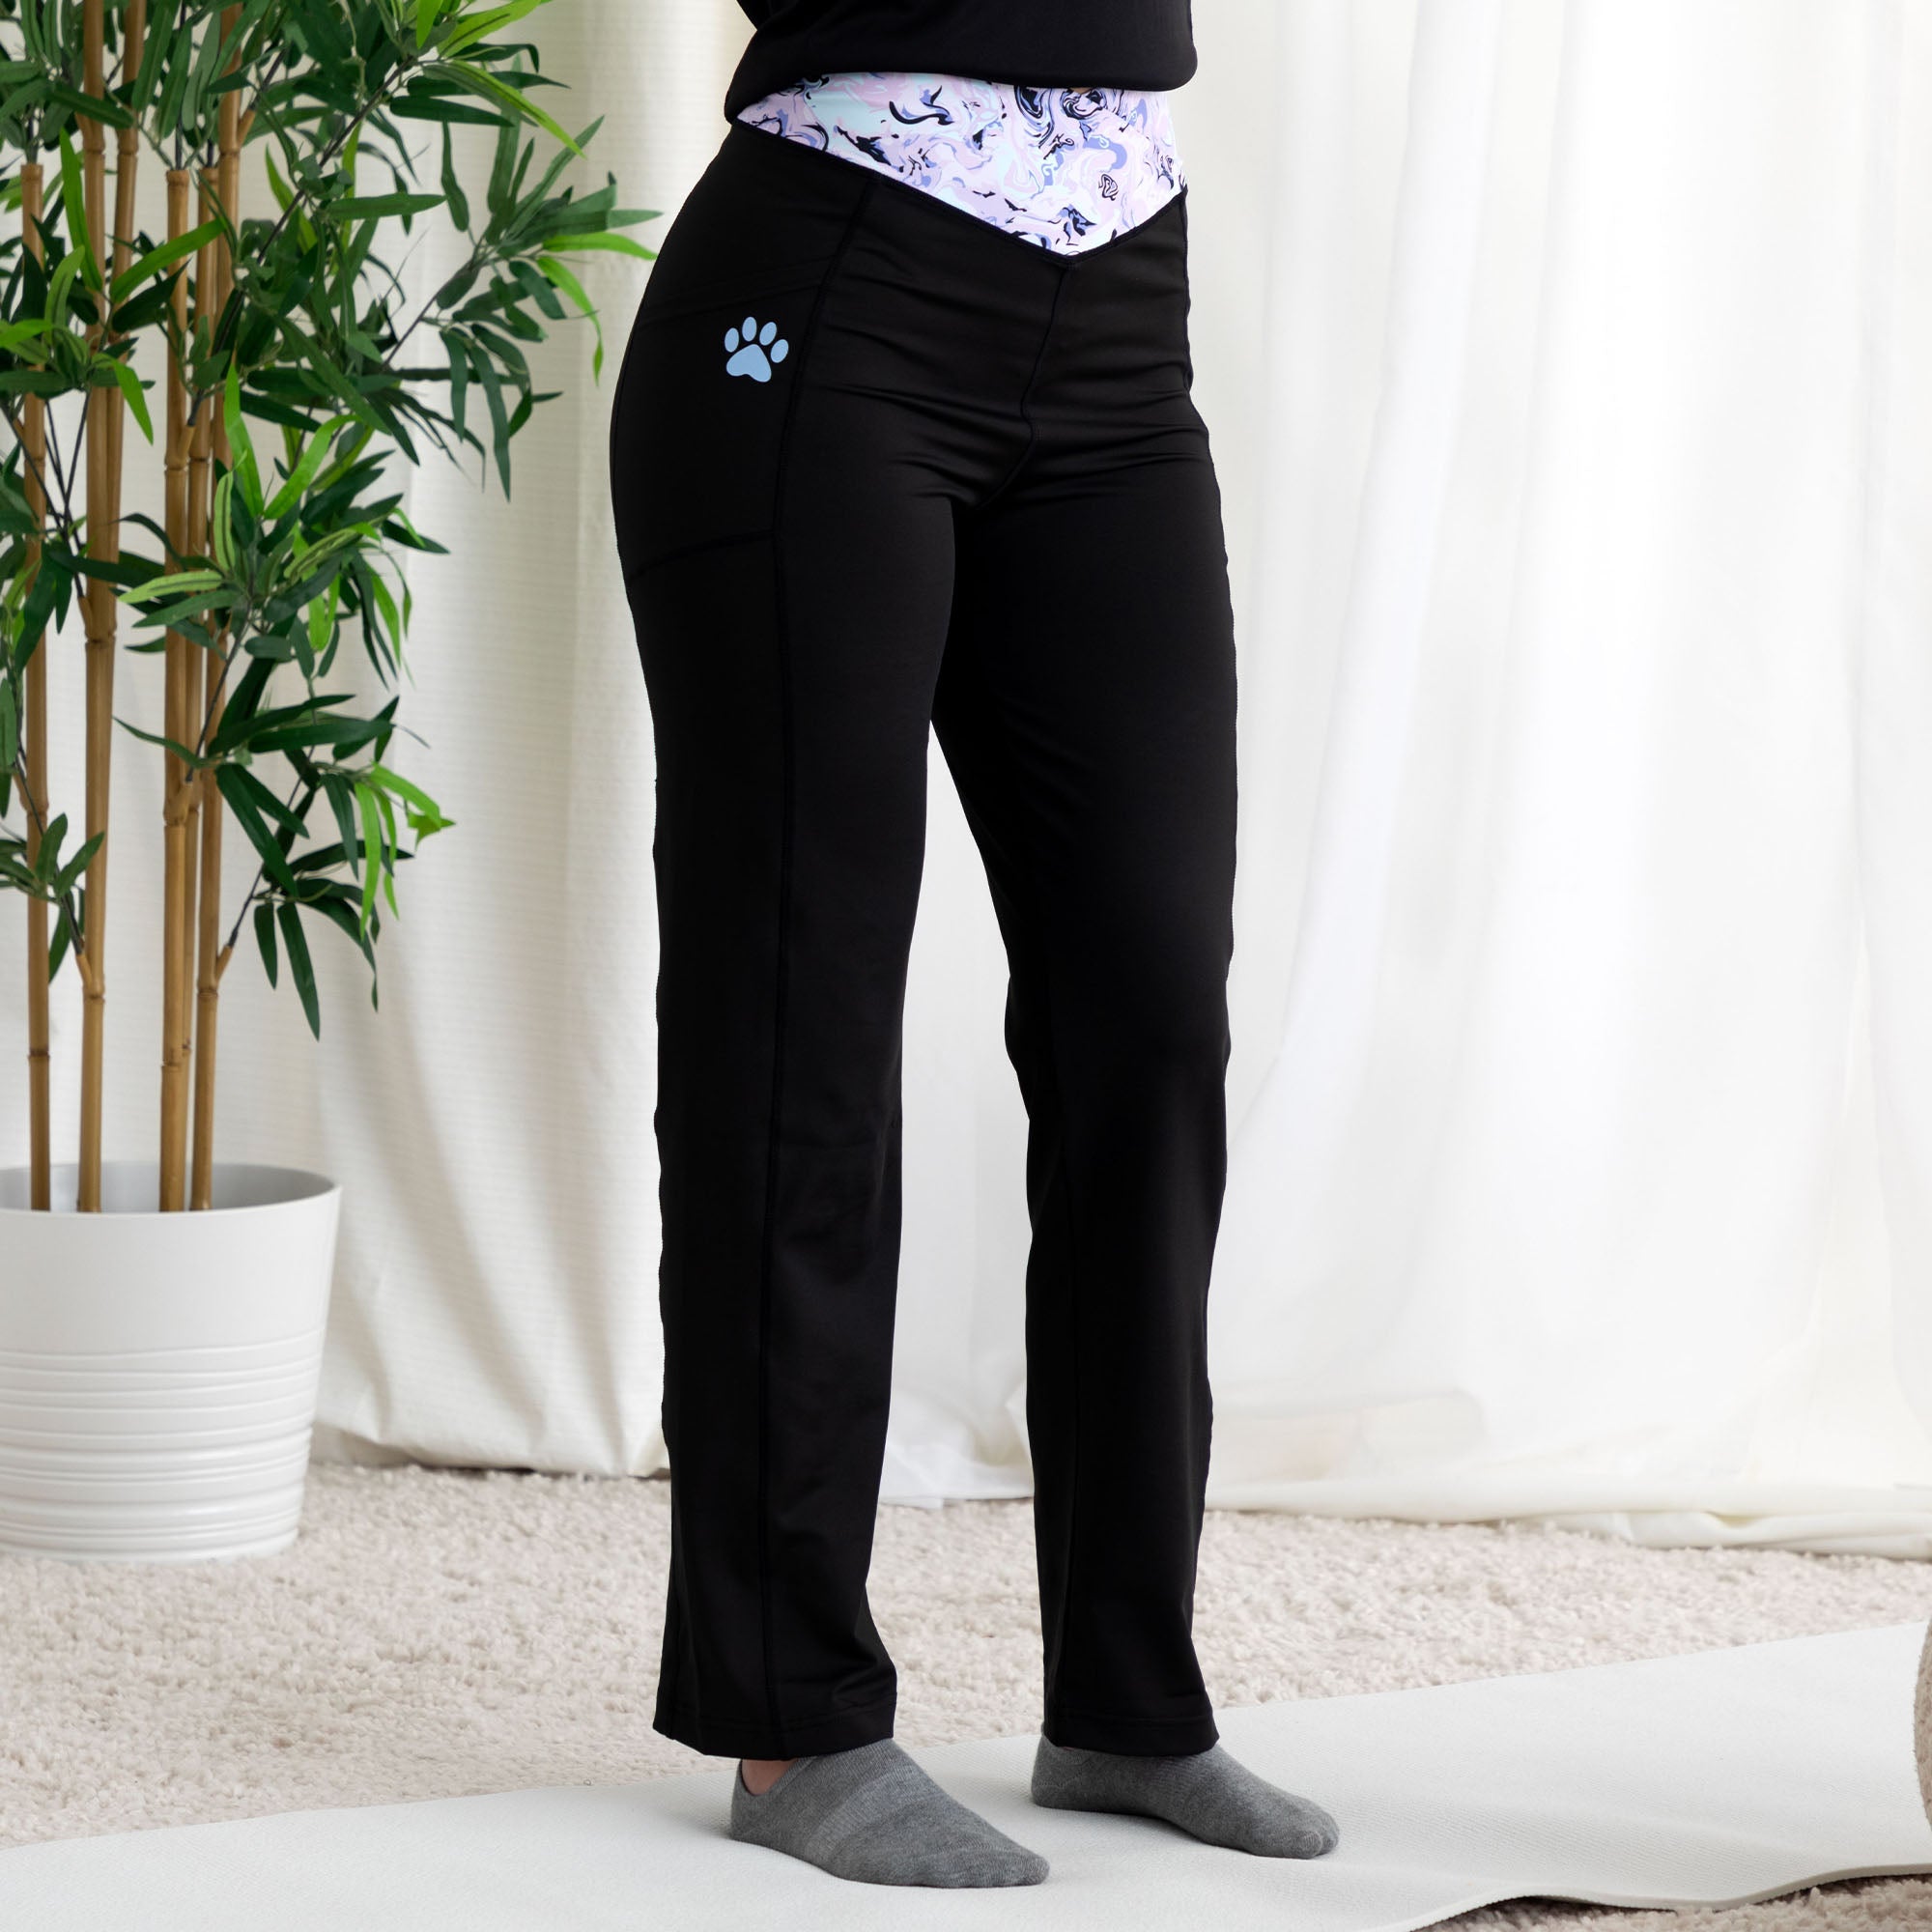 Yoga Paw Print Cross Over Separates - Black - Pants - L